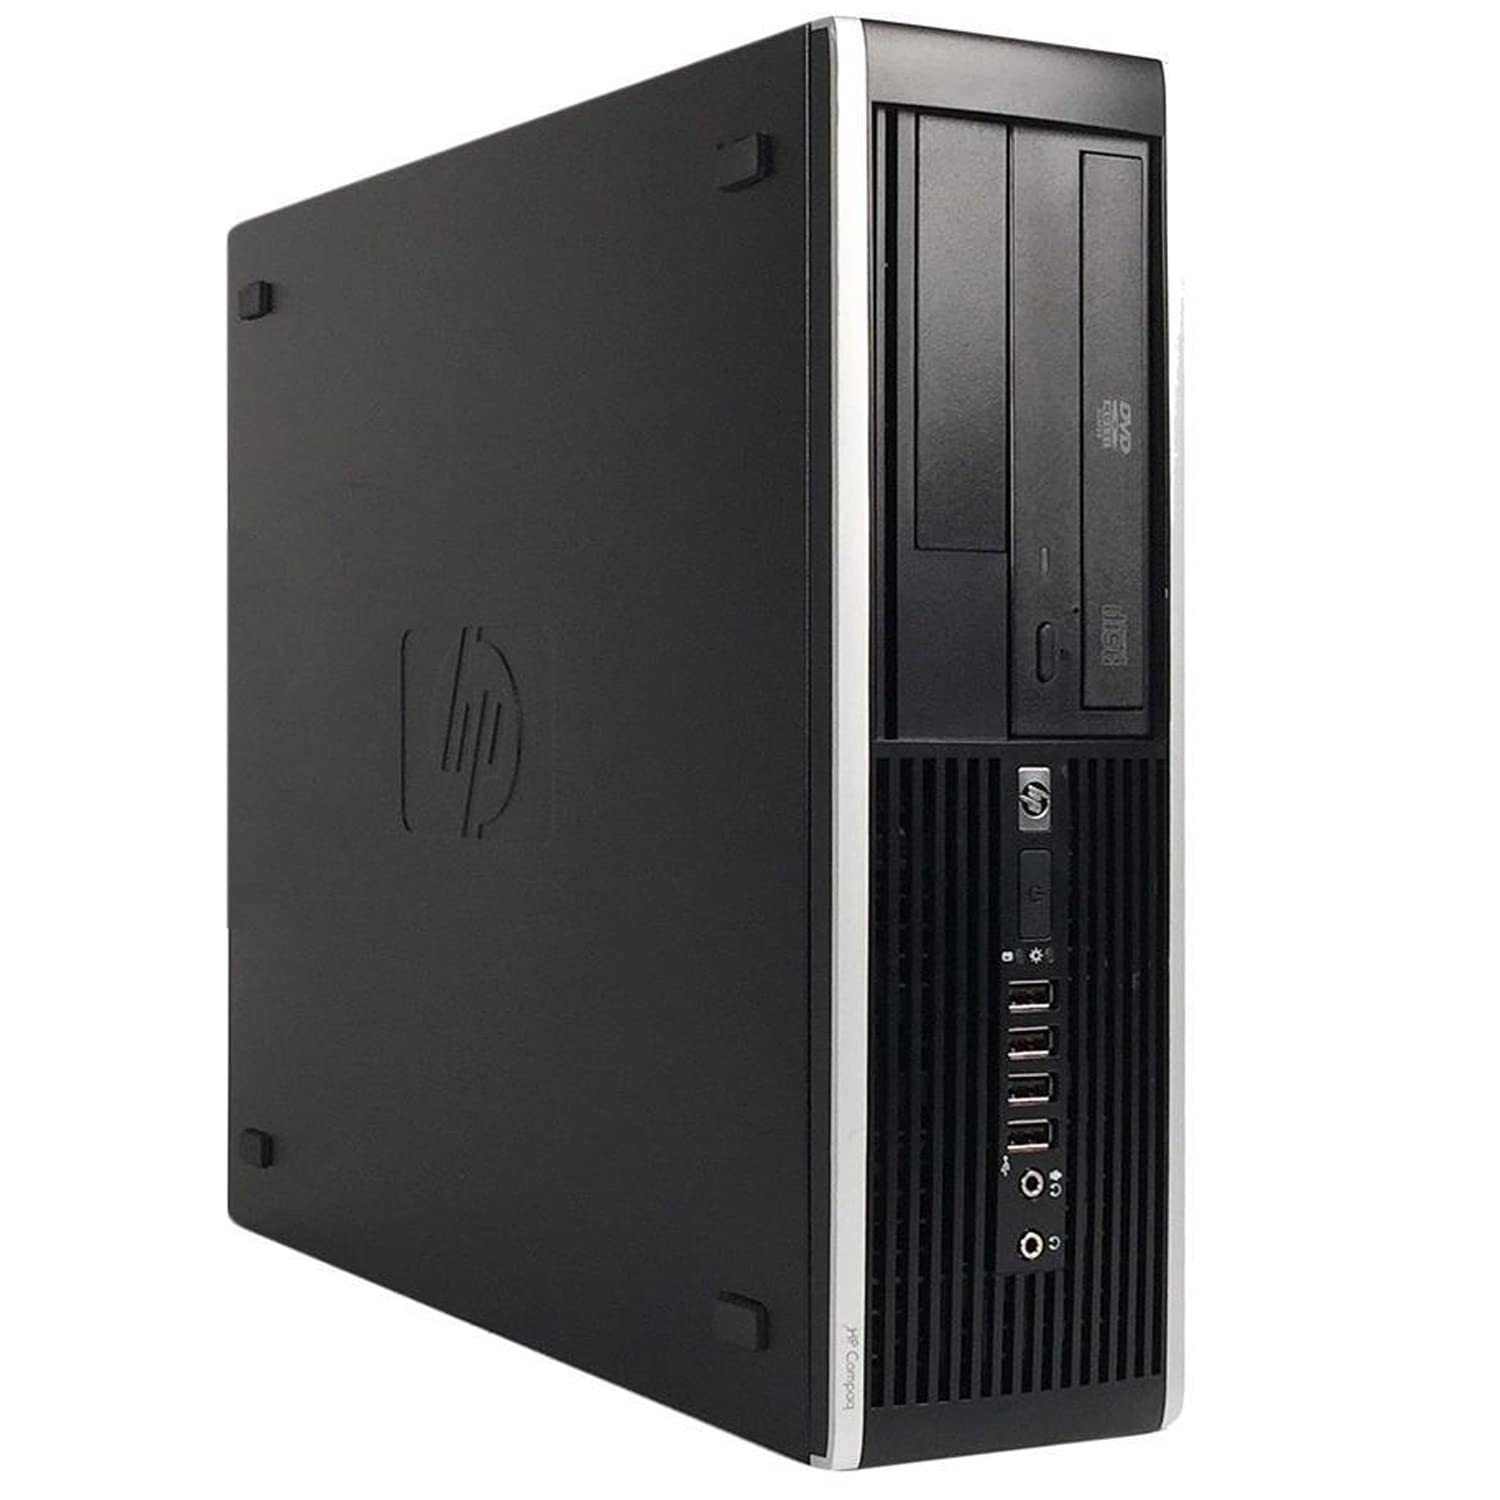 HP Elite Desktop Computer, Intel Core i5 3.2 GHz, 4 GB RAM, 250 GB HDD, Keyboard & Mouse, Wi-Fi, 17" LCD Monitor (Brands Vary), DVD-ROM, Windows 10, (Renewed)